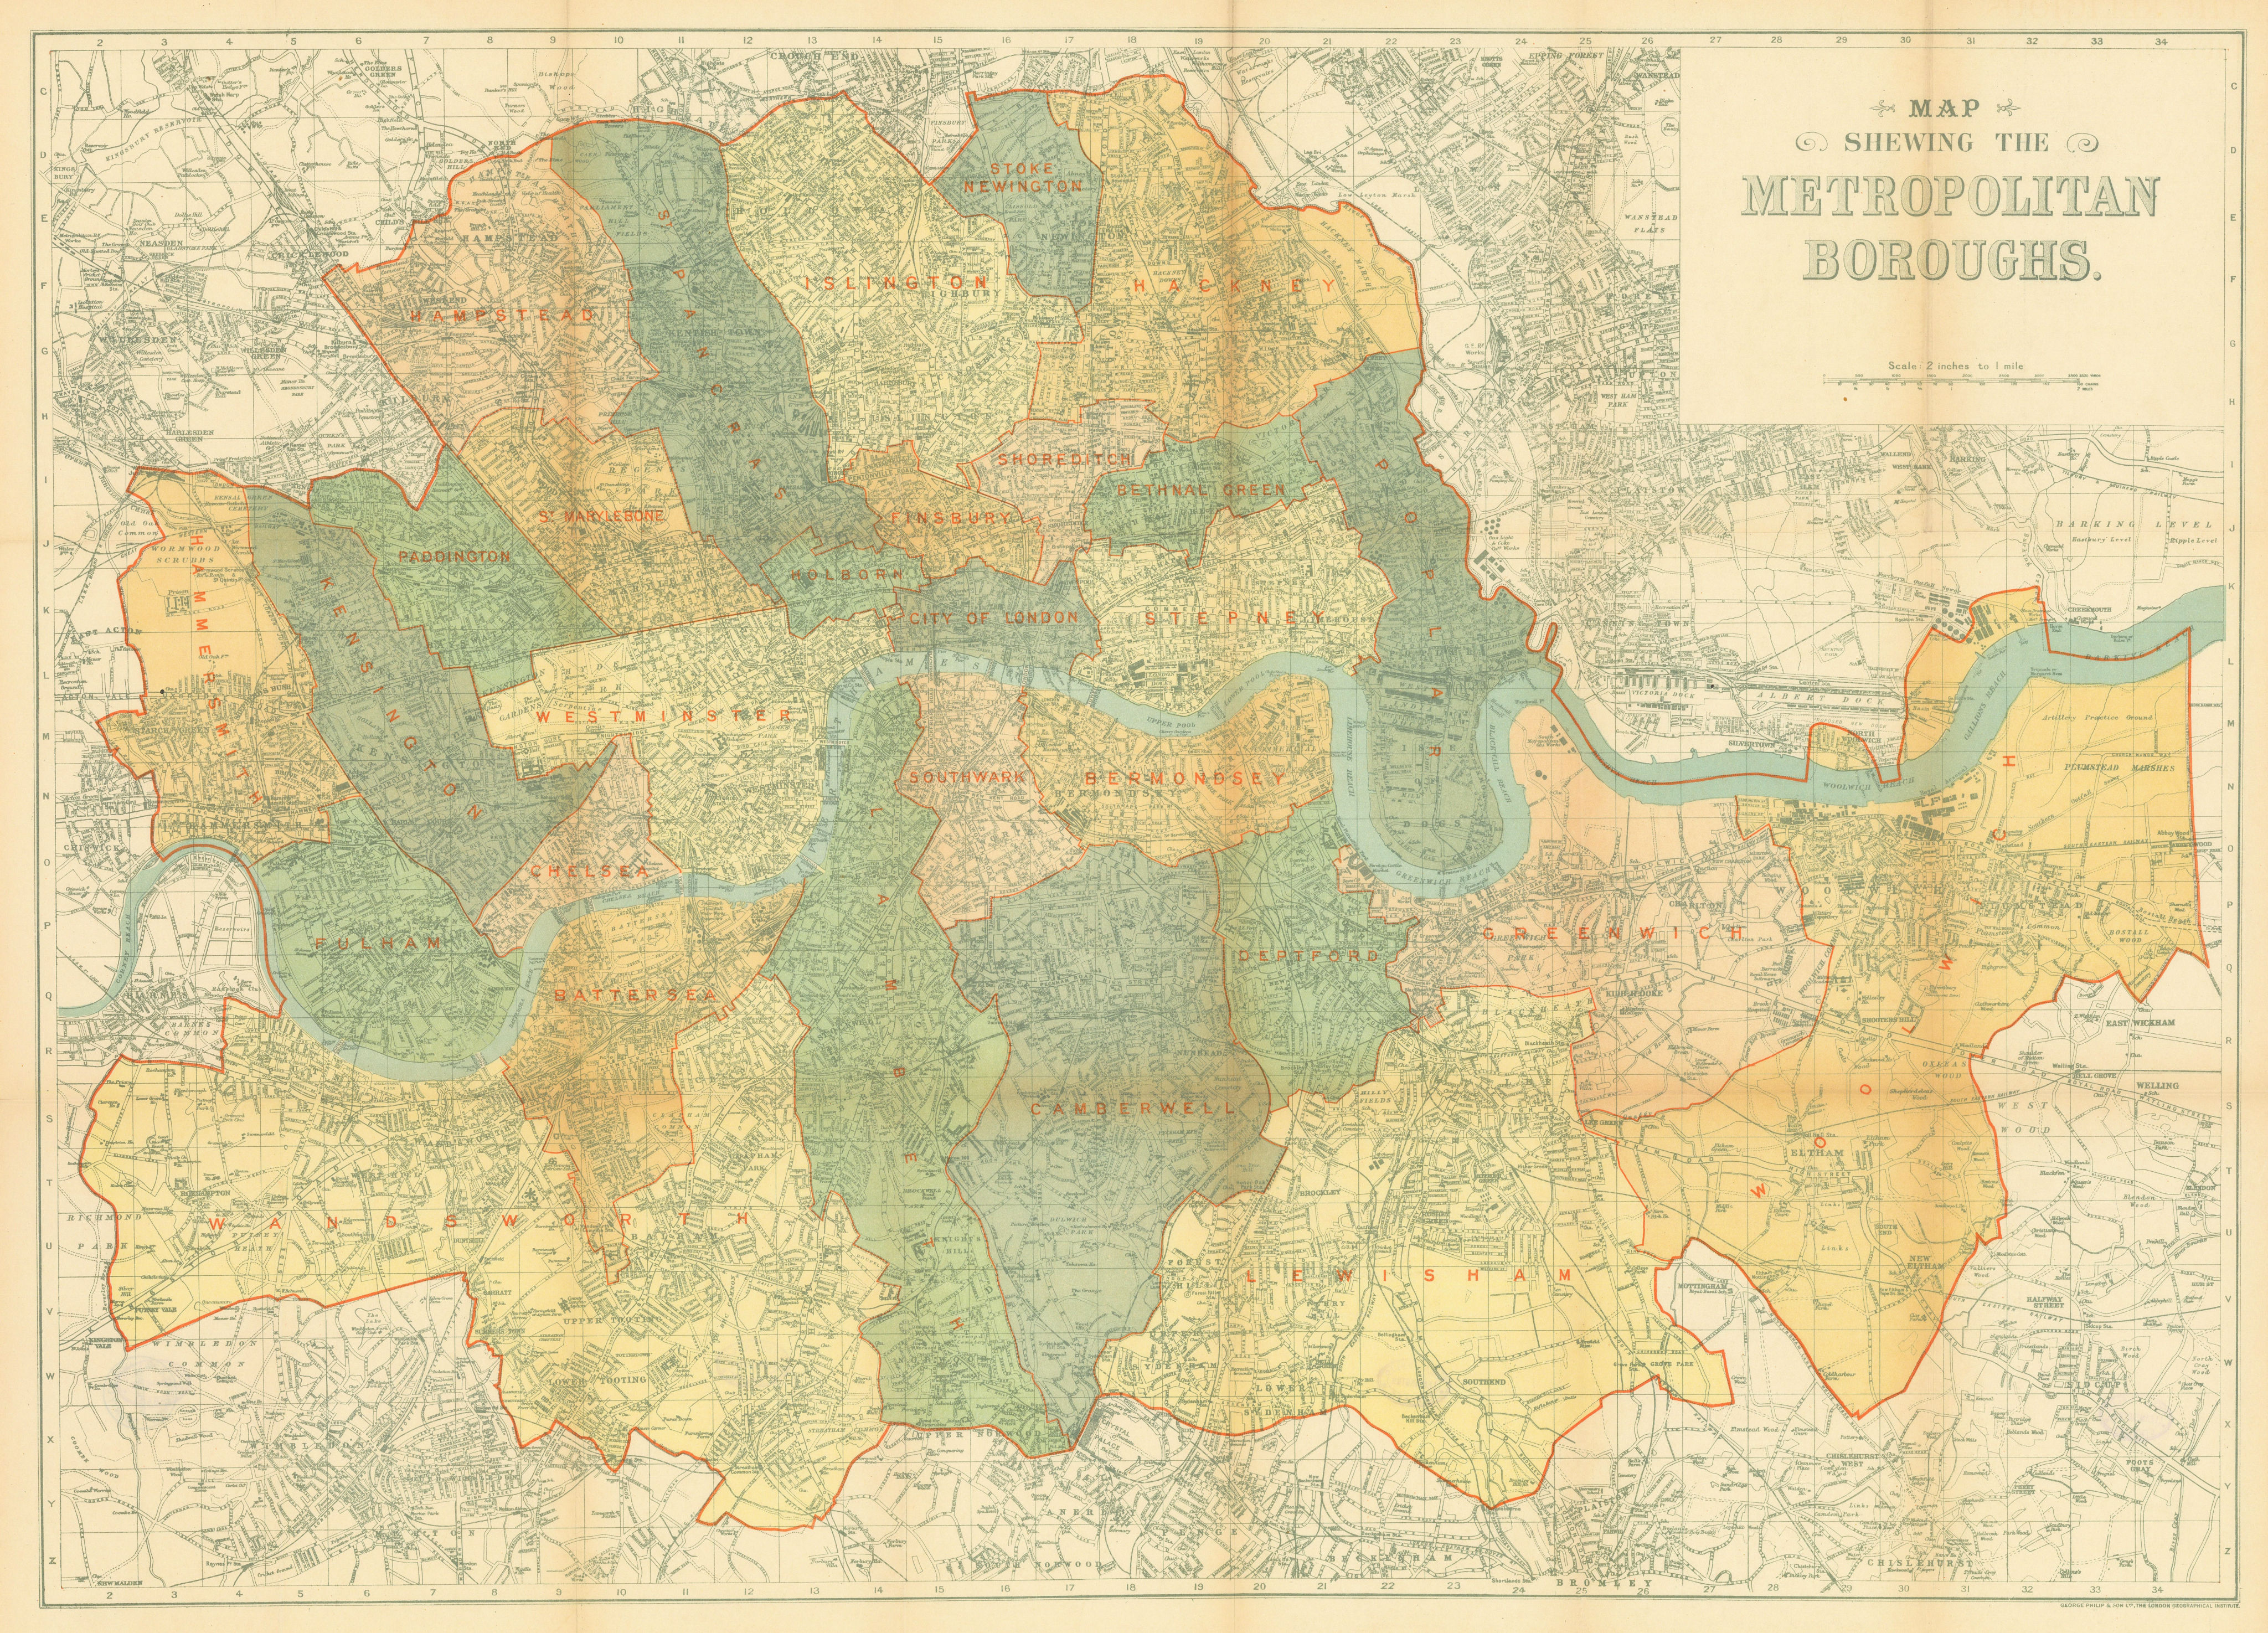 Associate Product Map shewing the Metropolitan Boroughs. London. 66x92cm. PHILIP 1904 old